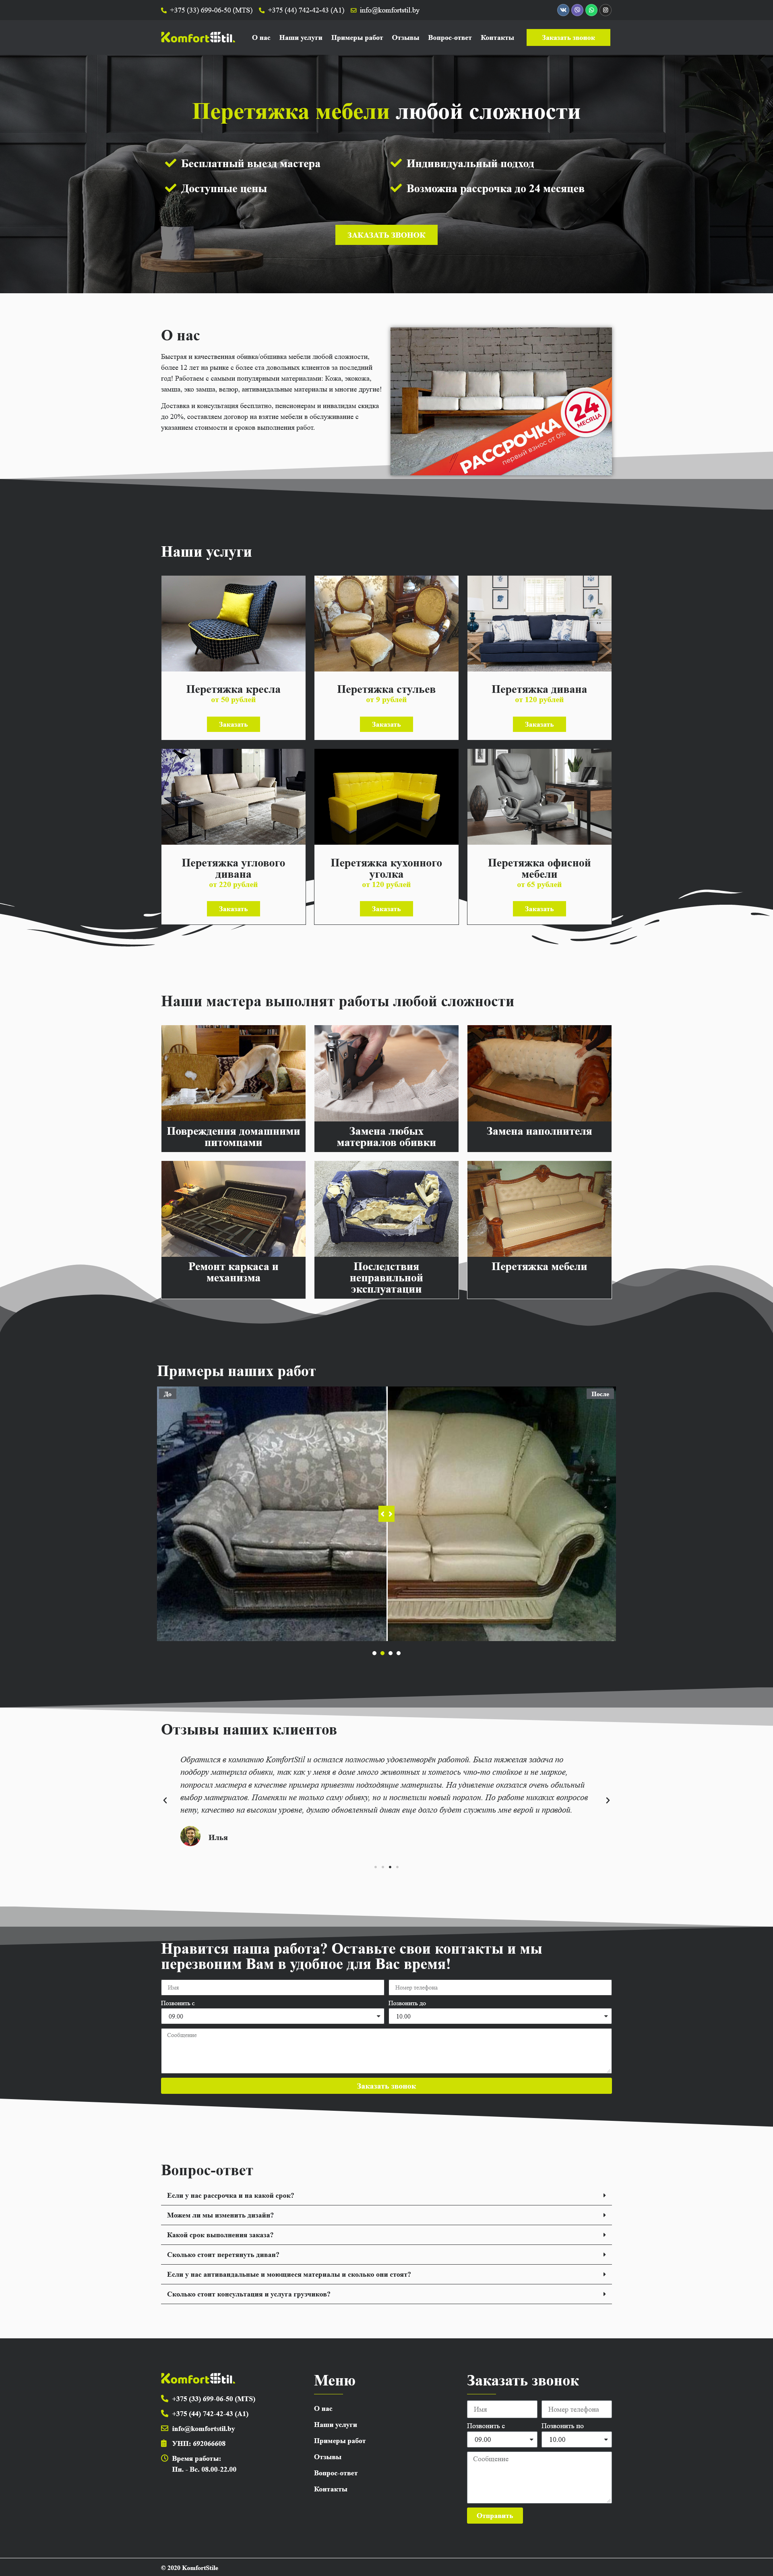 Разработка лендинг пейдж для услуг по перешивке мебели "KomfortStil"